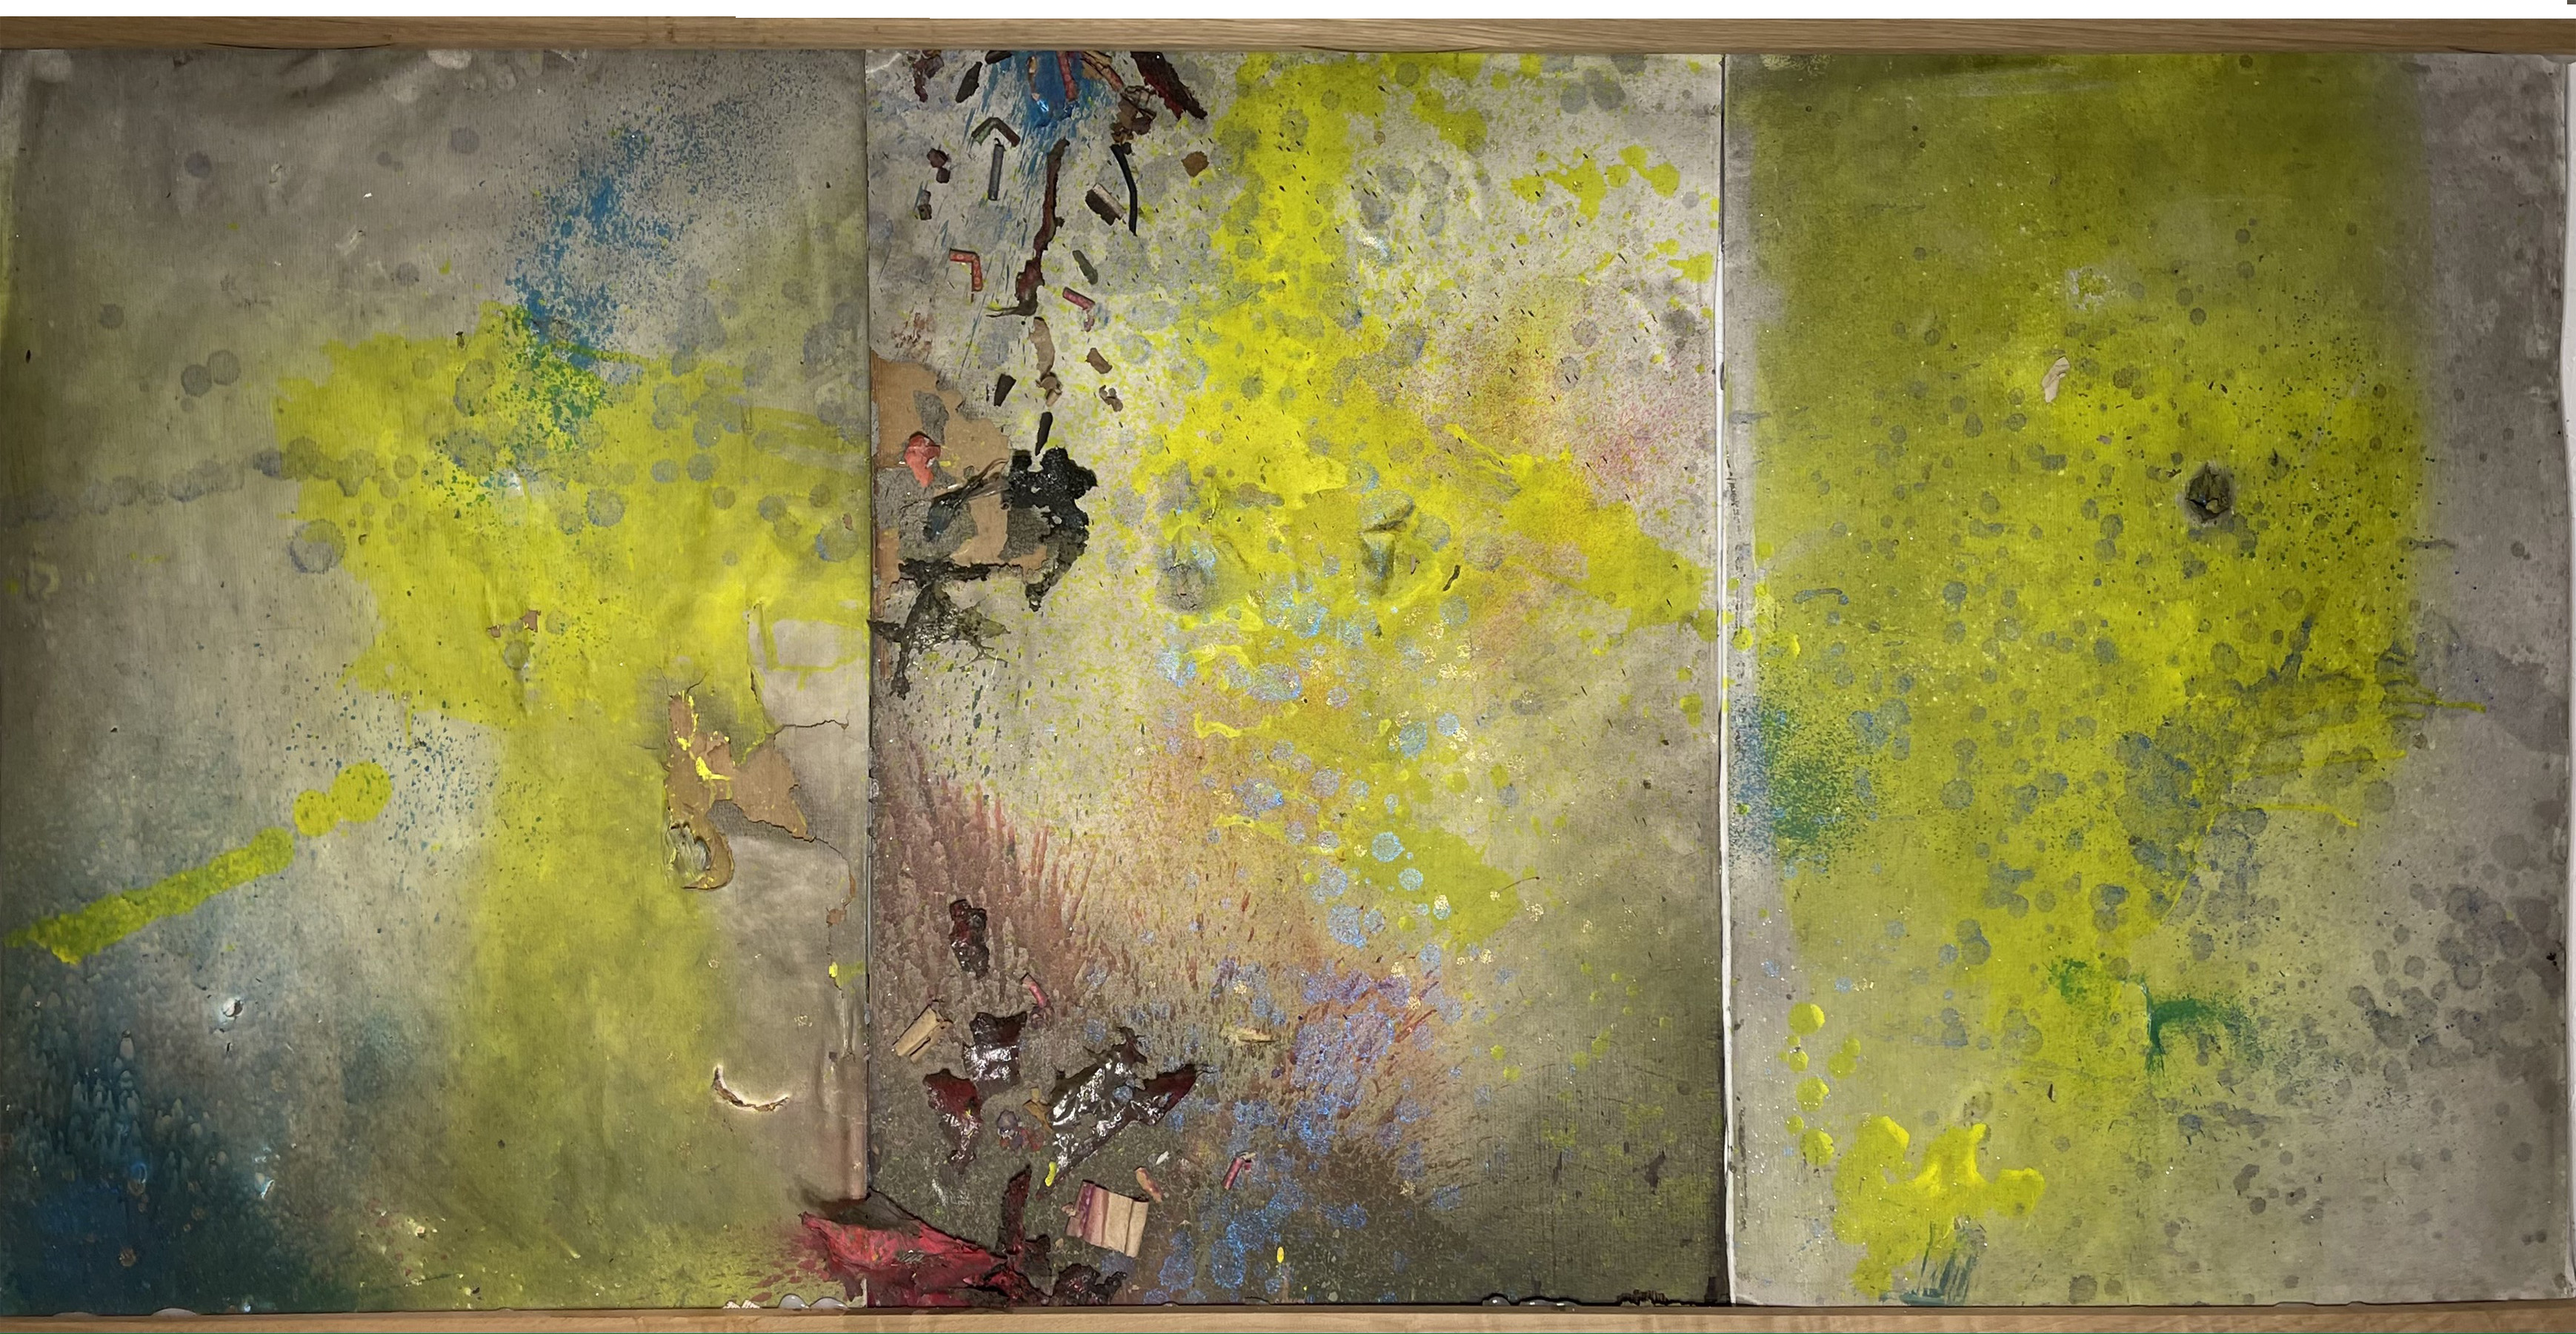 framed flourescent paints on canvas board using explosives